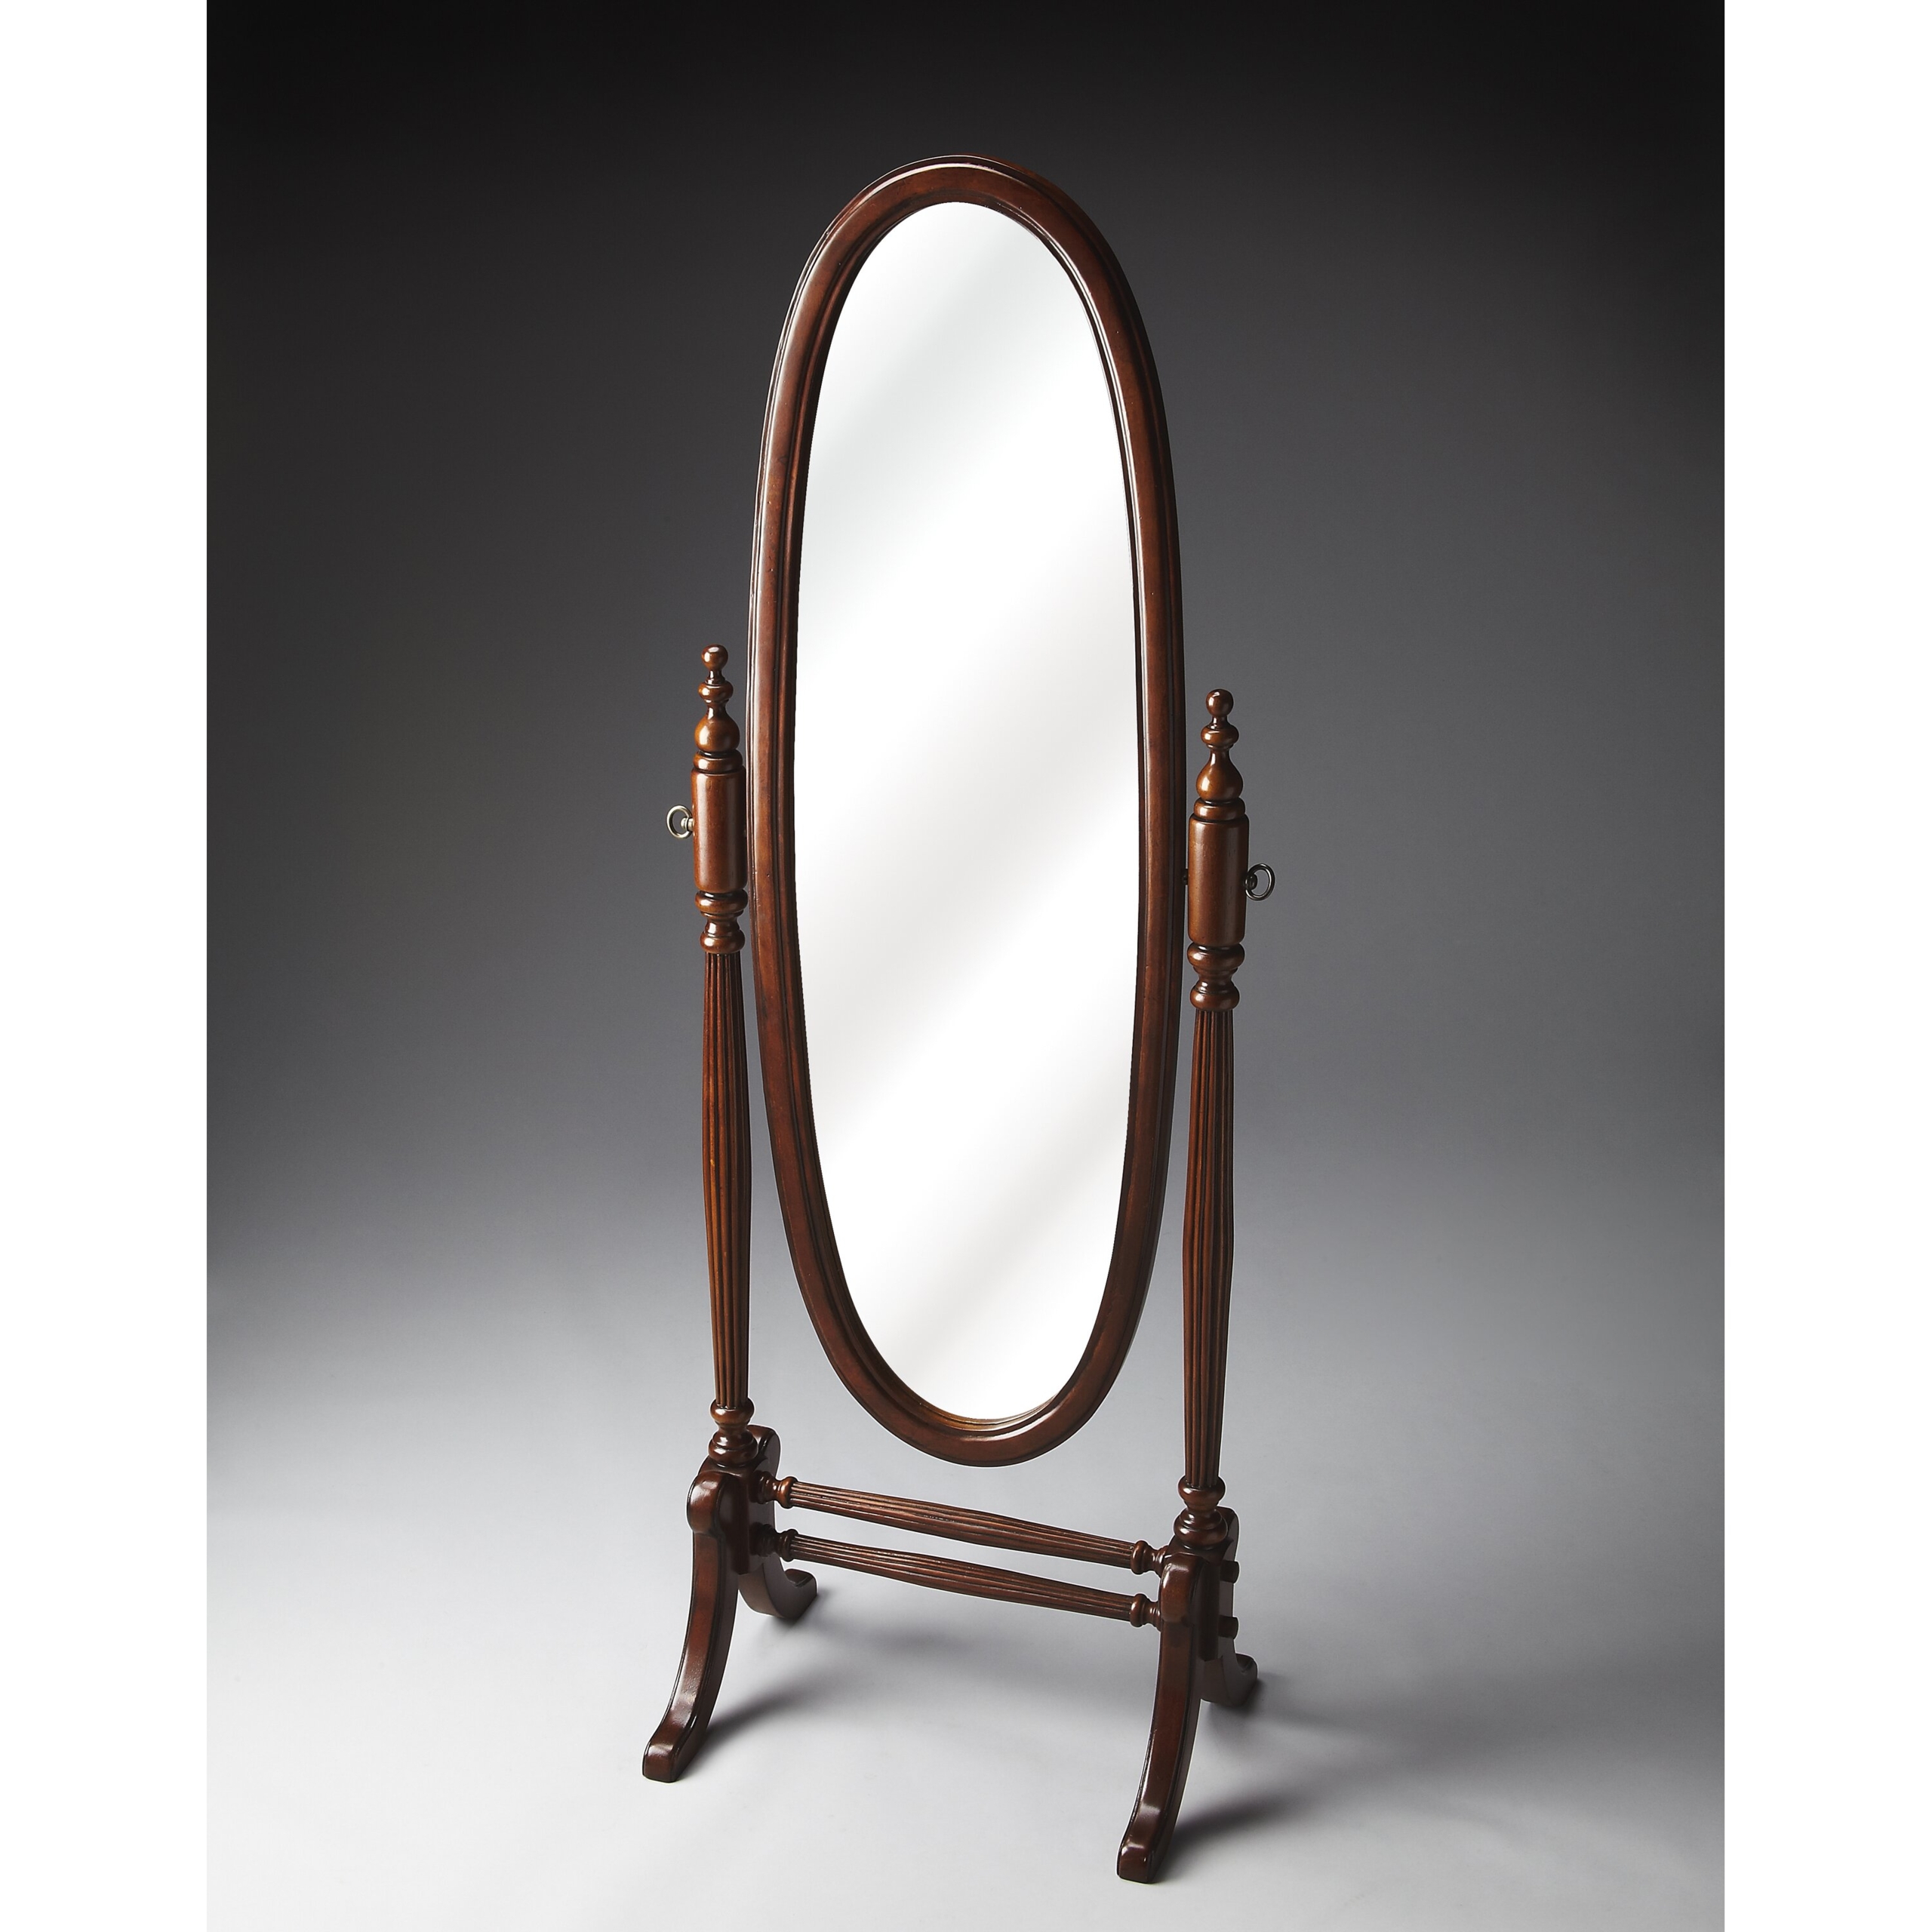 Details about   Hongville Wood Rectangular Oval Cheval Floor Mirror Free Standing Mirror 